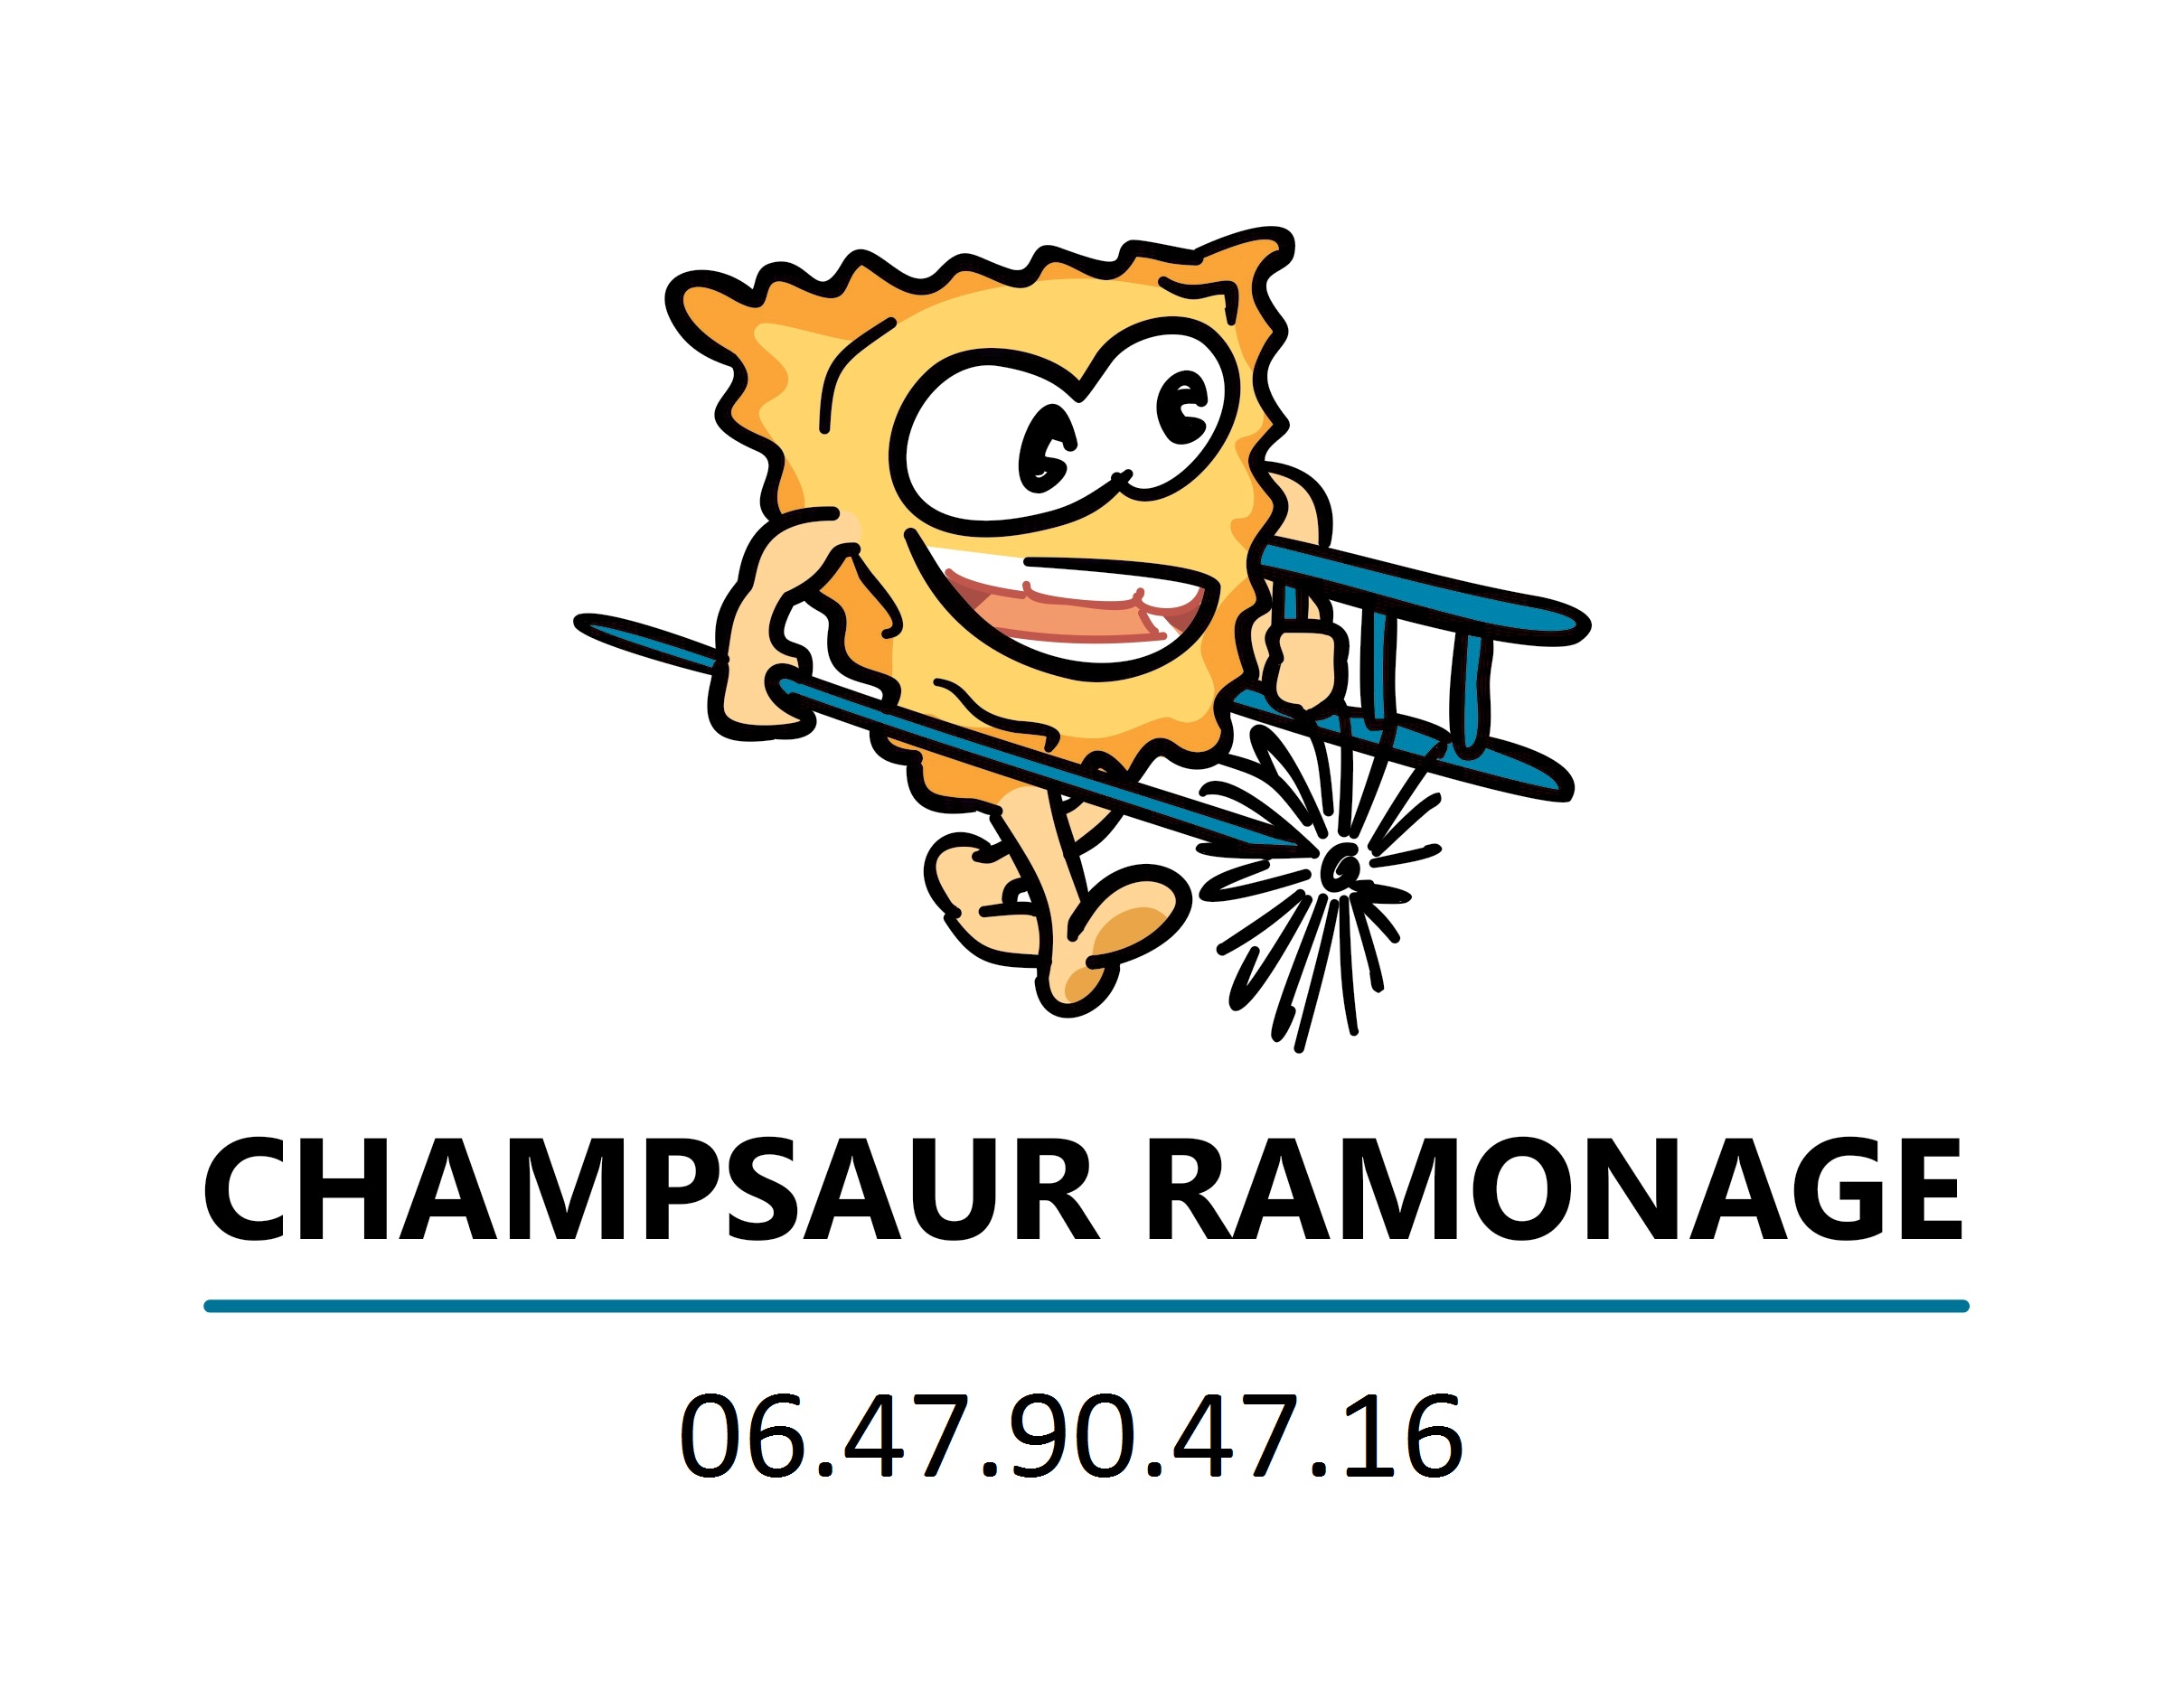 Champsaur Ramonage